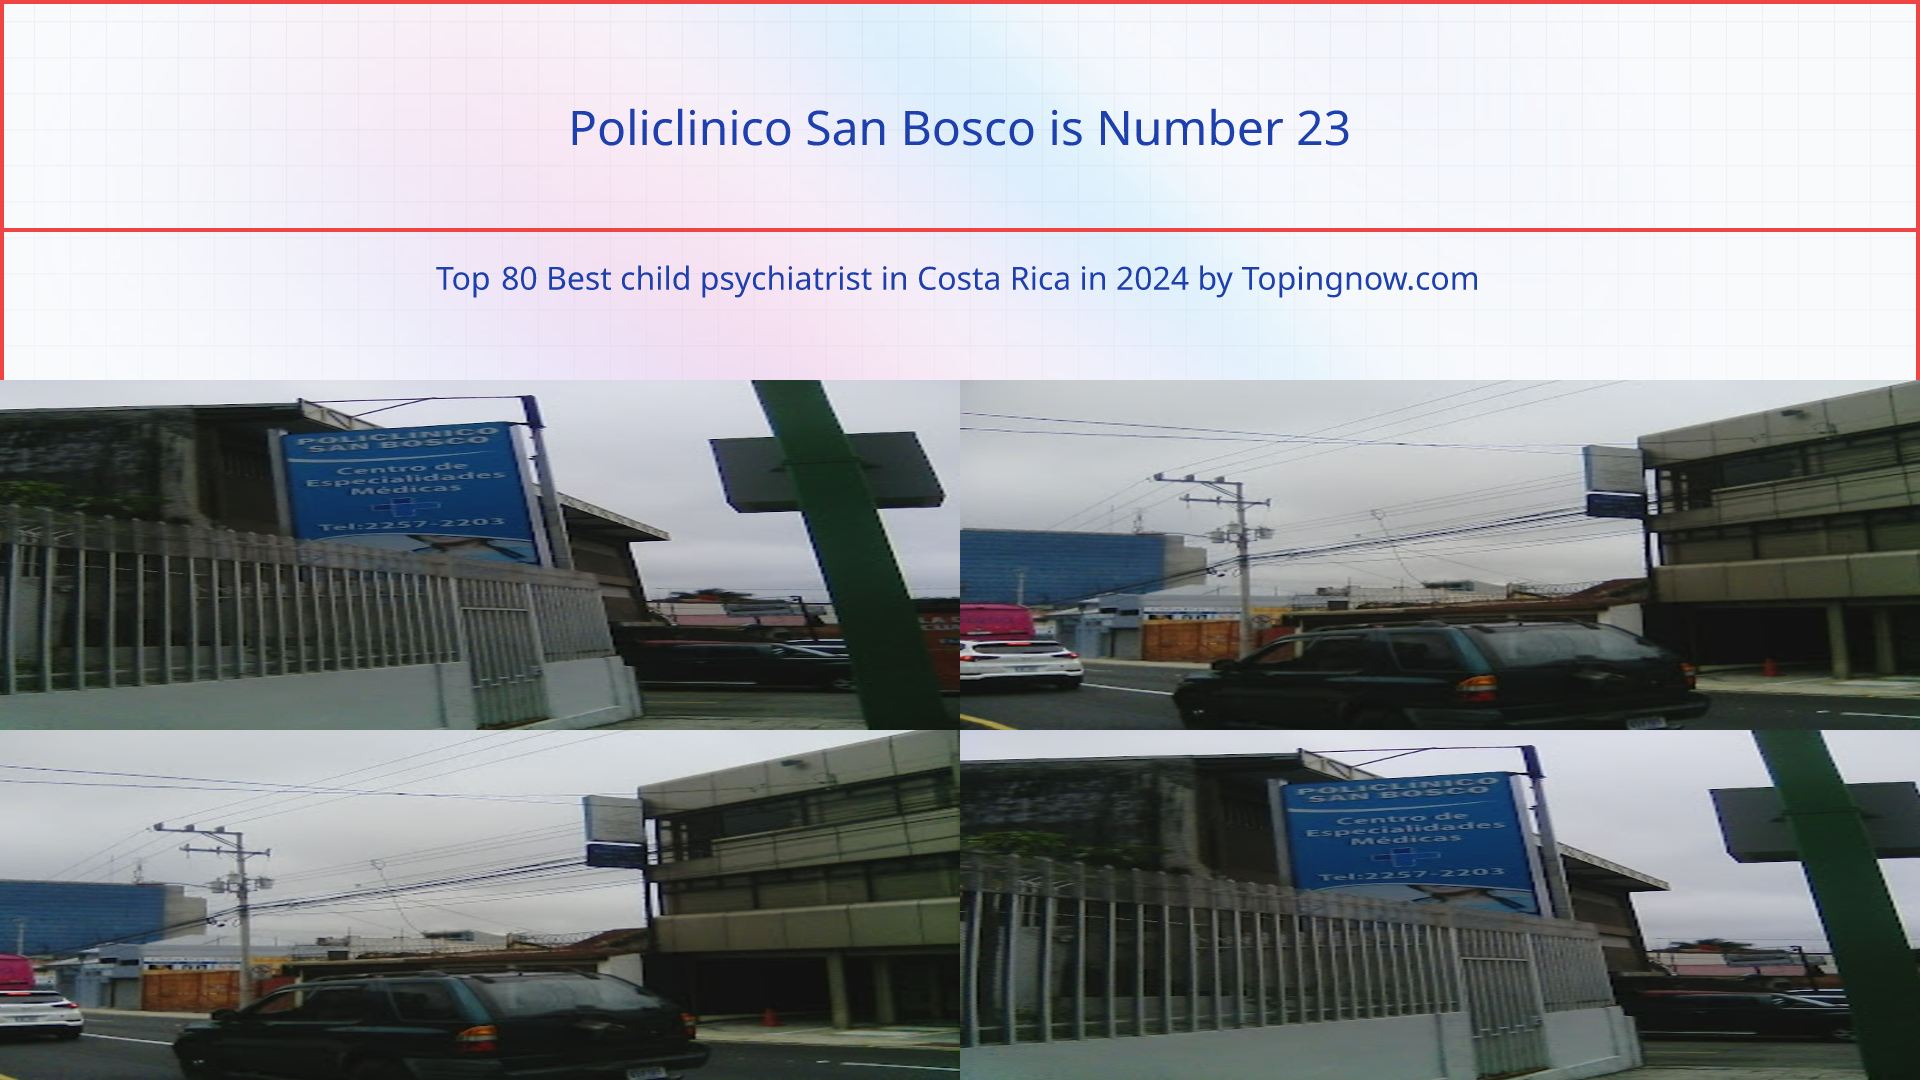 Policlinico San Bosco: Top 80 Best child psychiatrist in Costa Rica in 2024